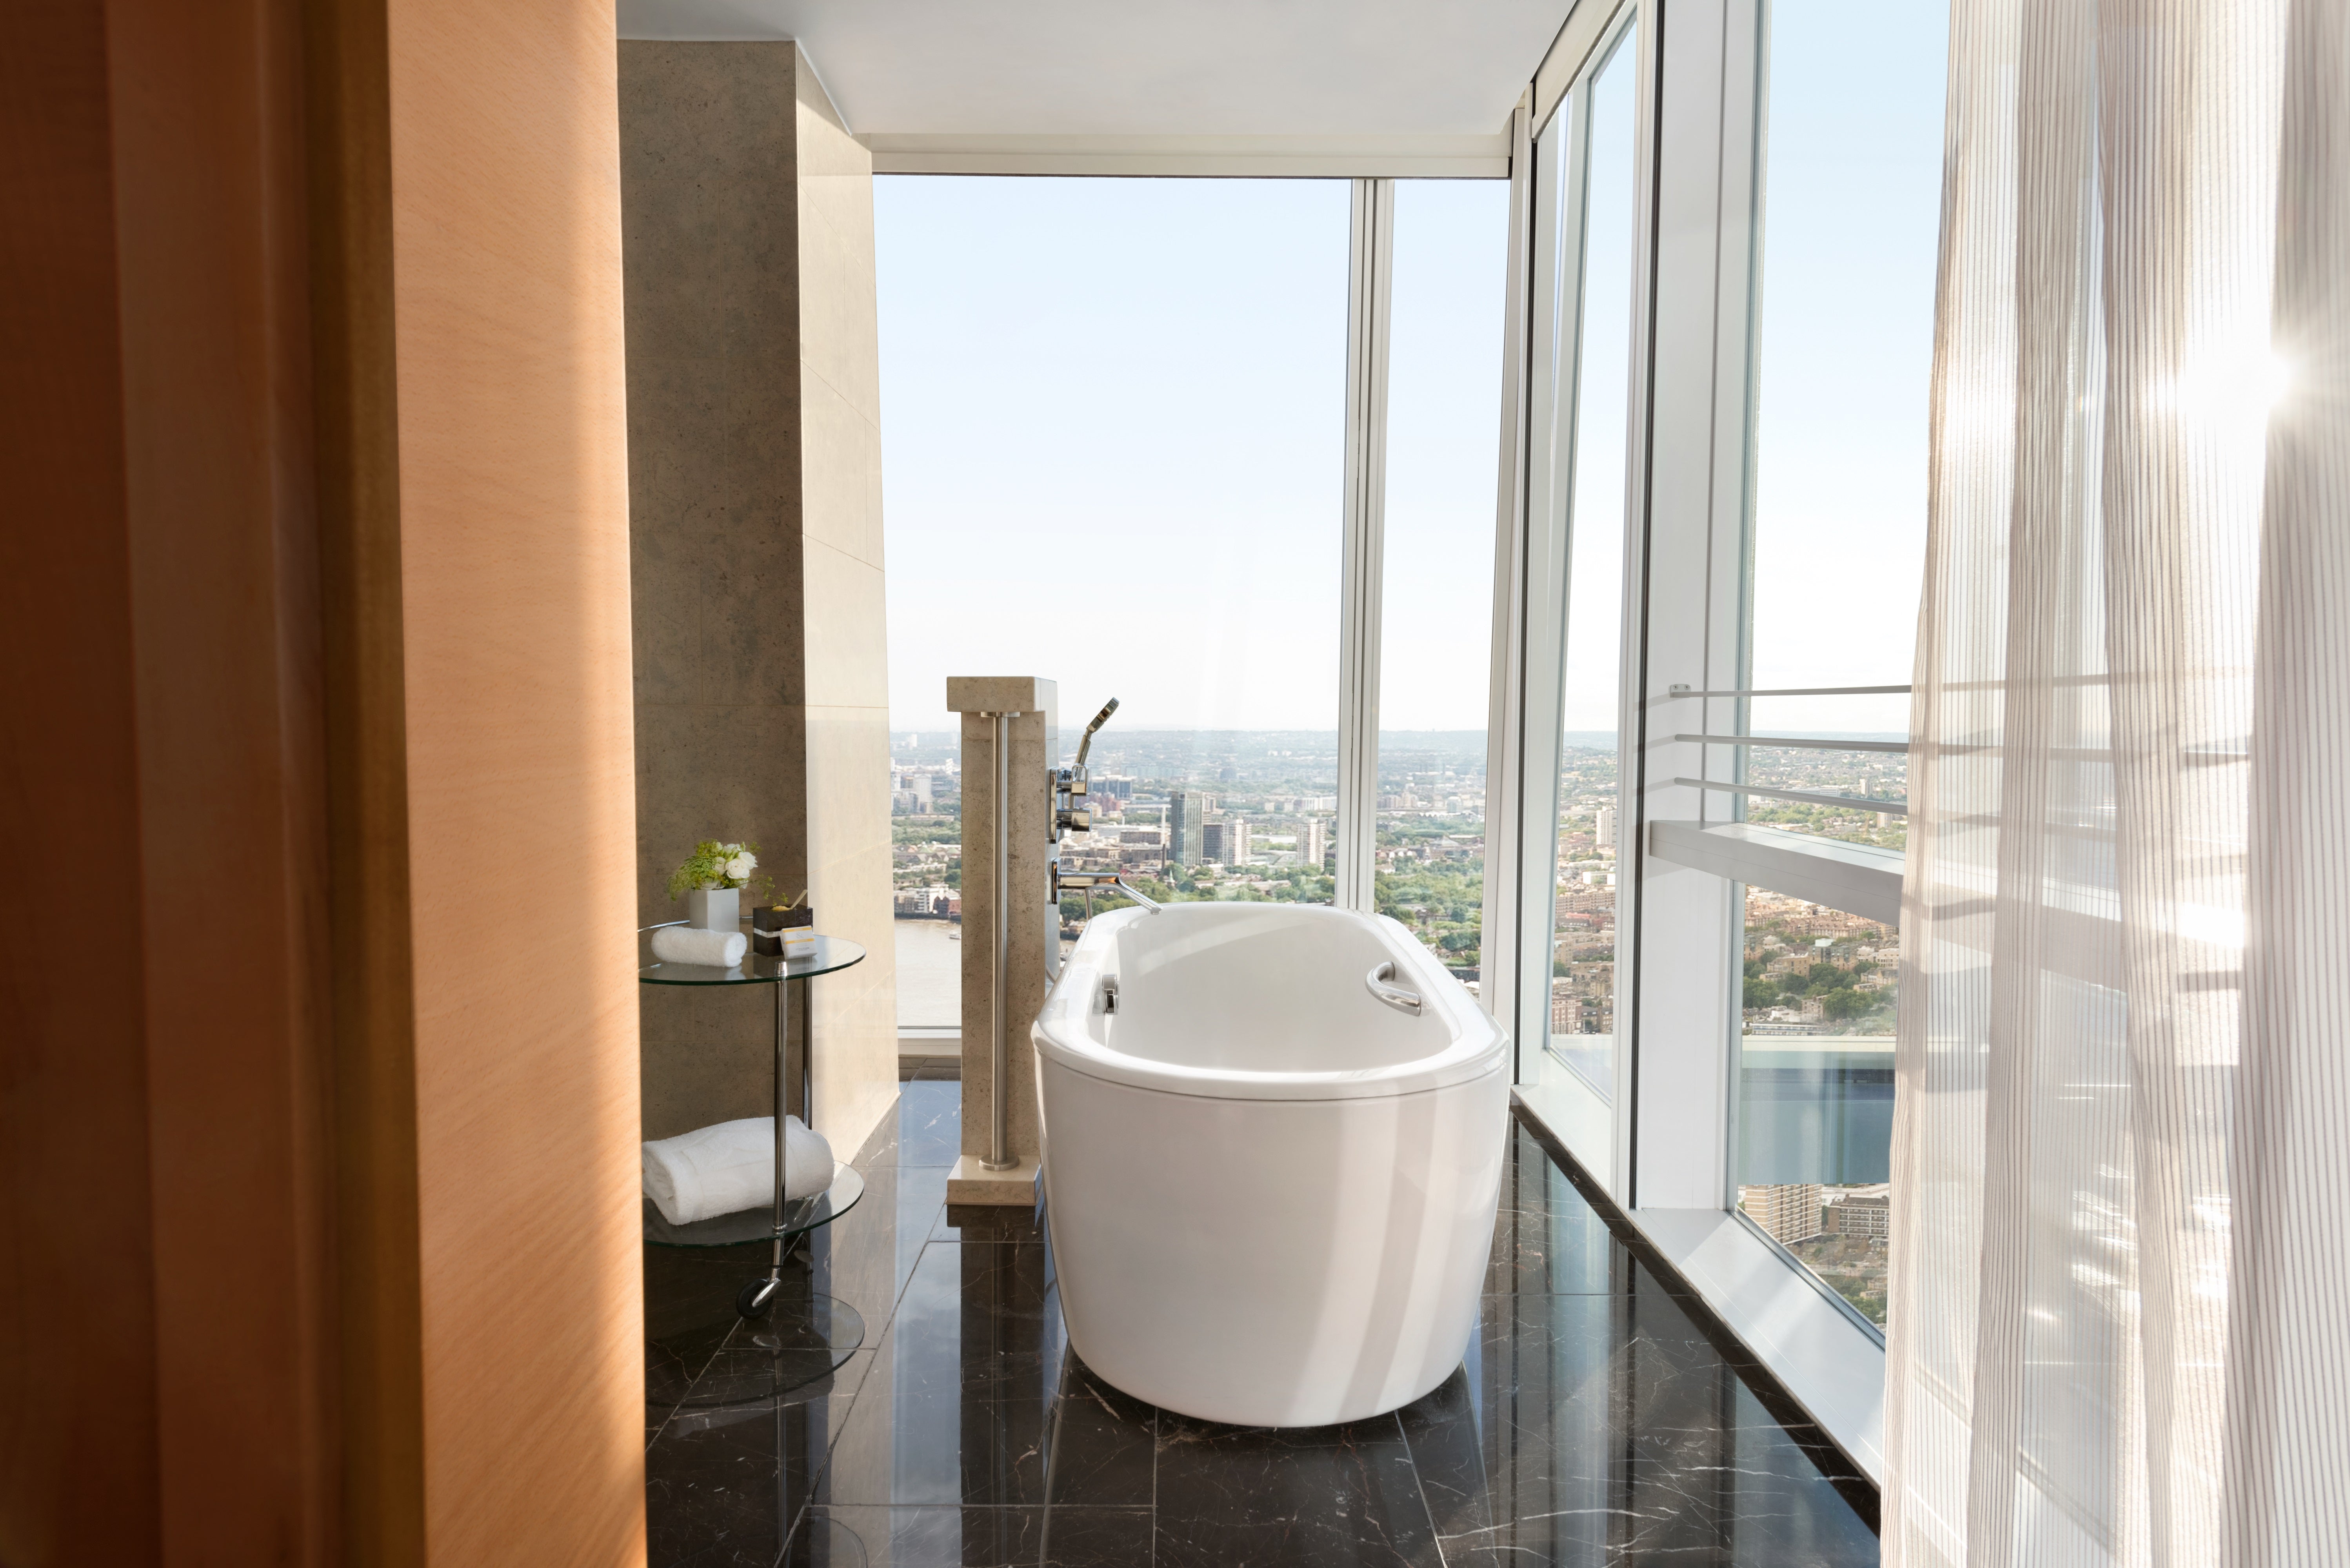 A bath with a view at Shangri-La London